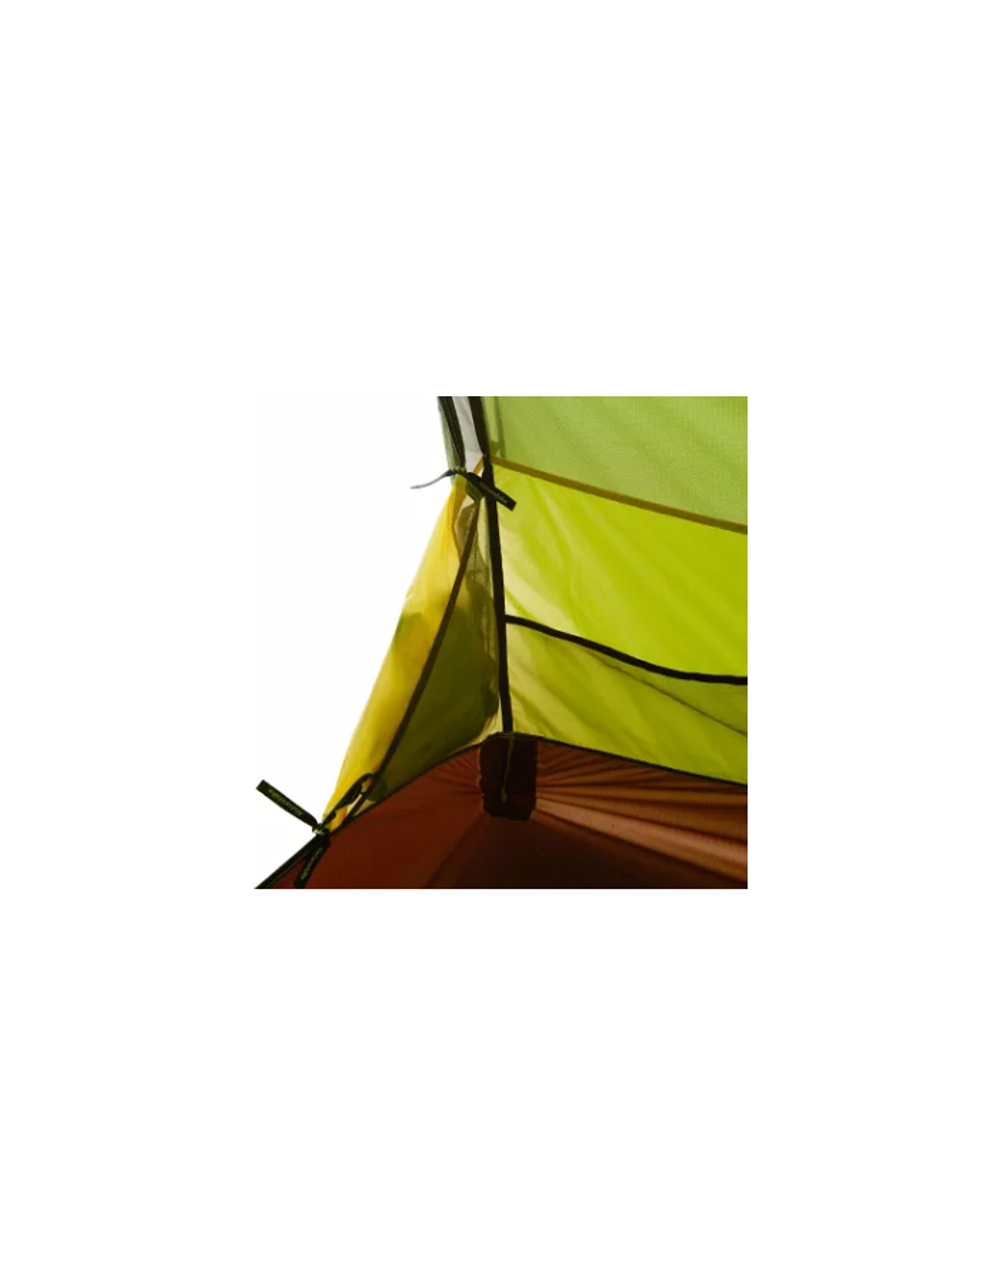 Палатка Naturehike Opalus Si 2-местная, алюминиевый каркас, зеленый